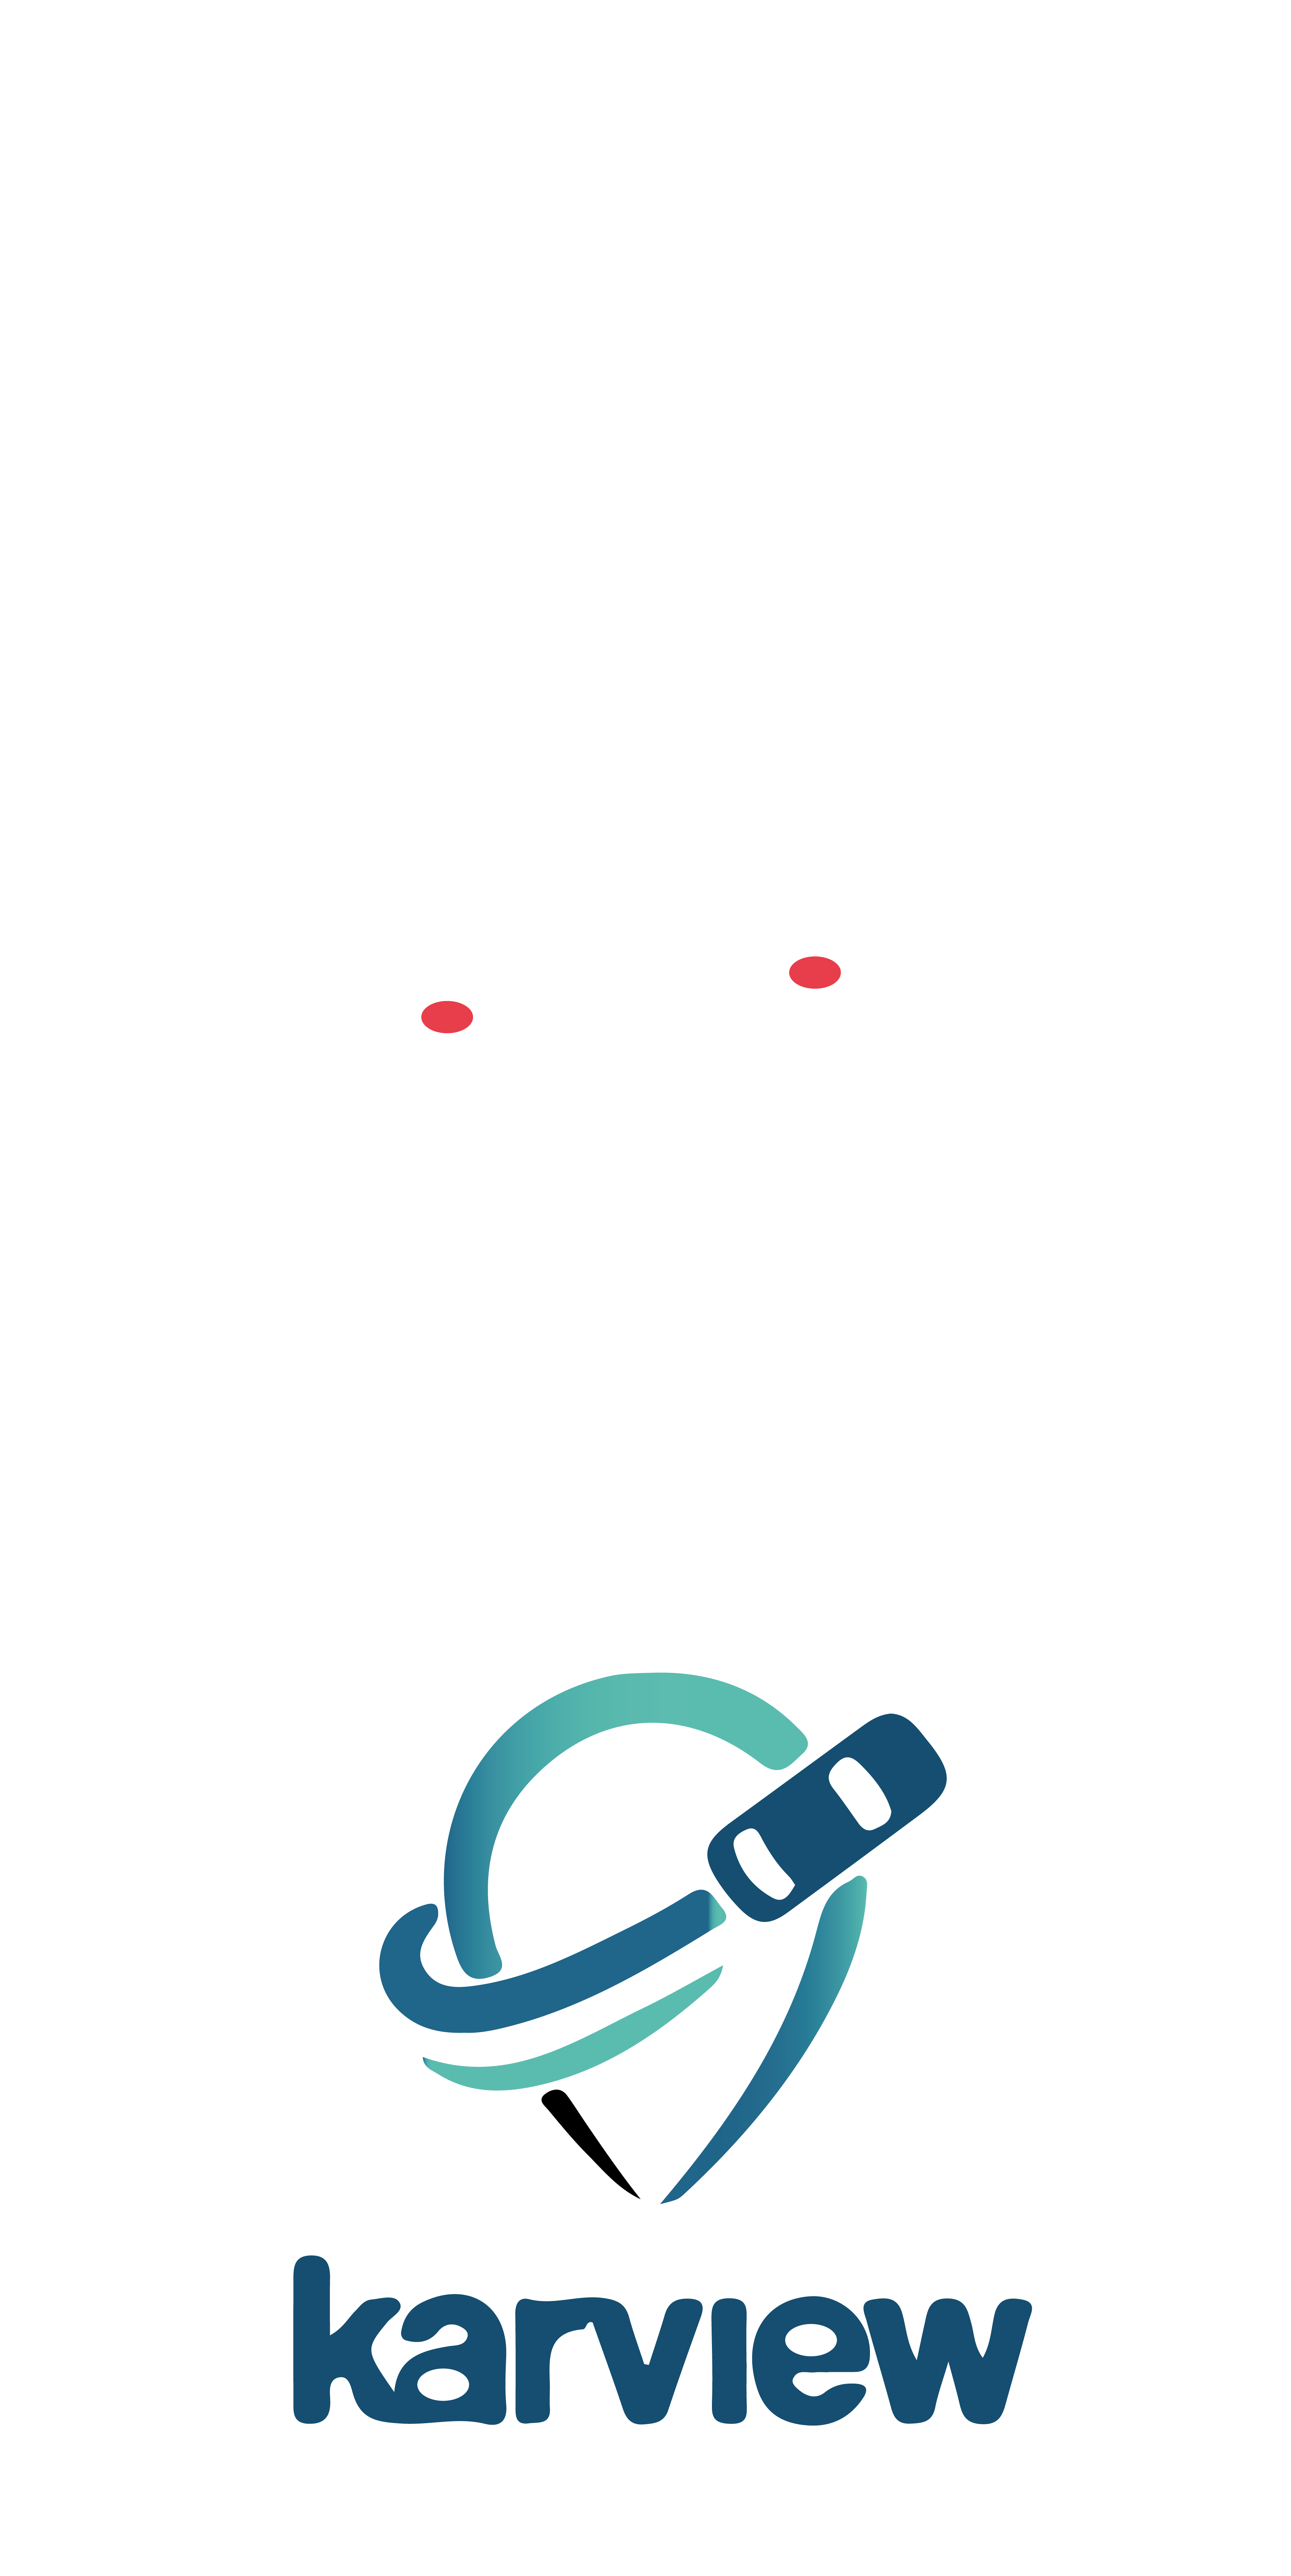 Karview